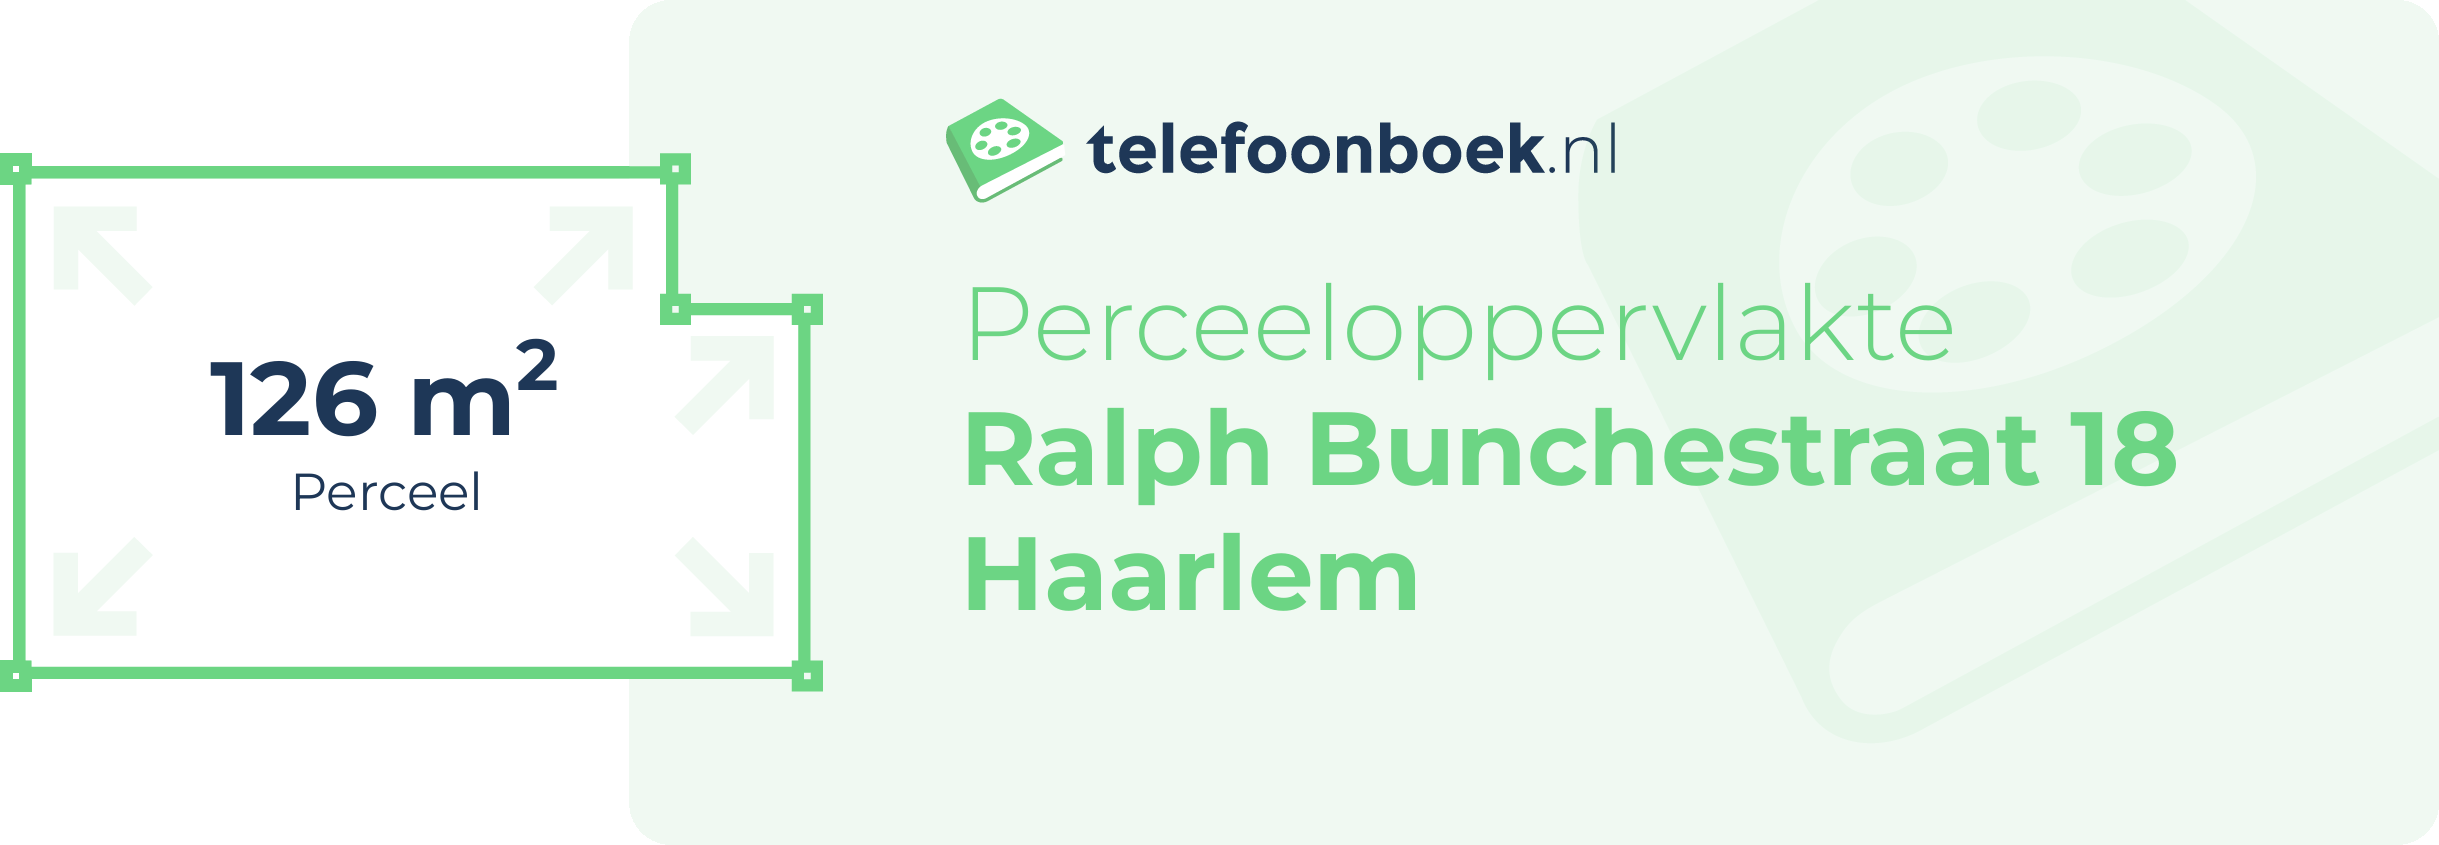 Perceeloppervlakte Ralph Bunchestraat 18 Haarlem